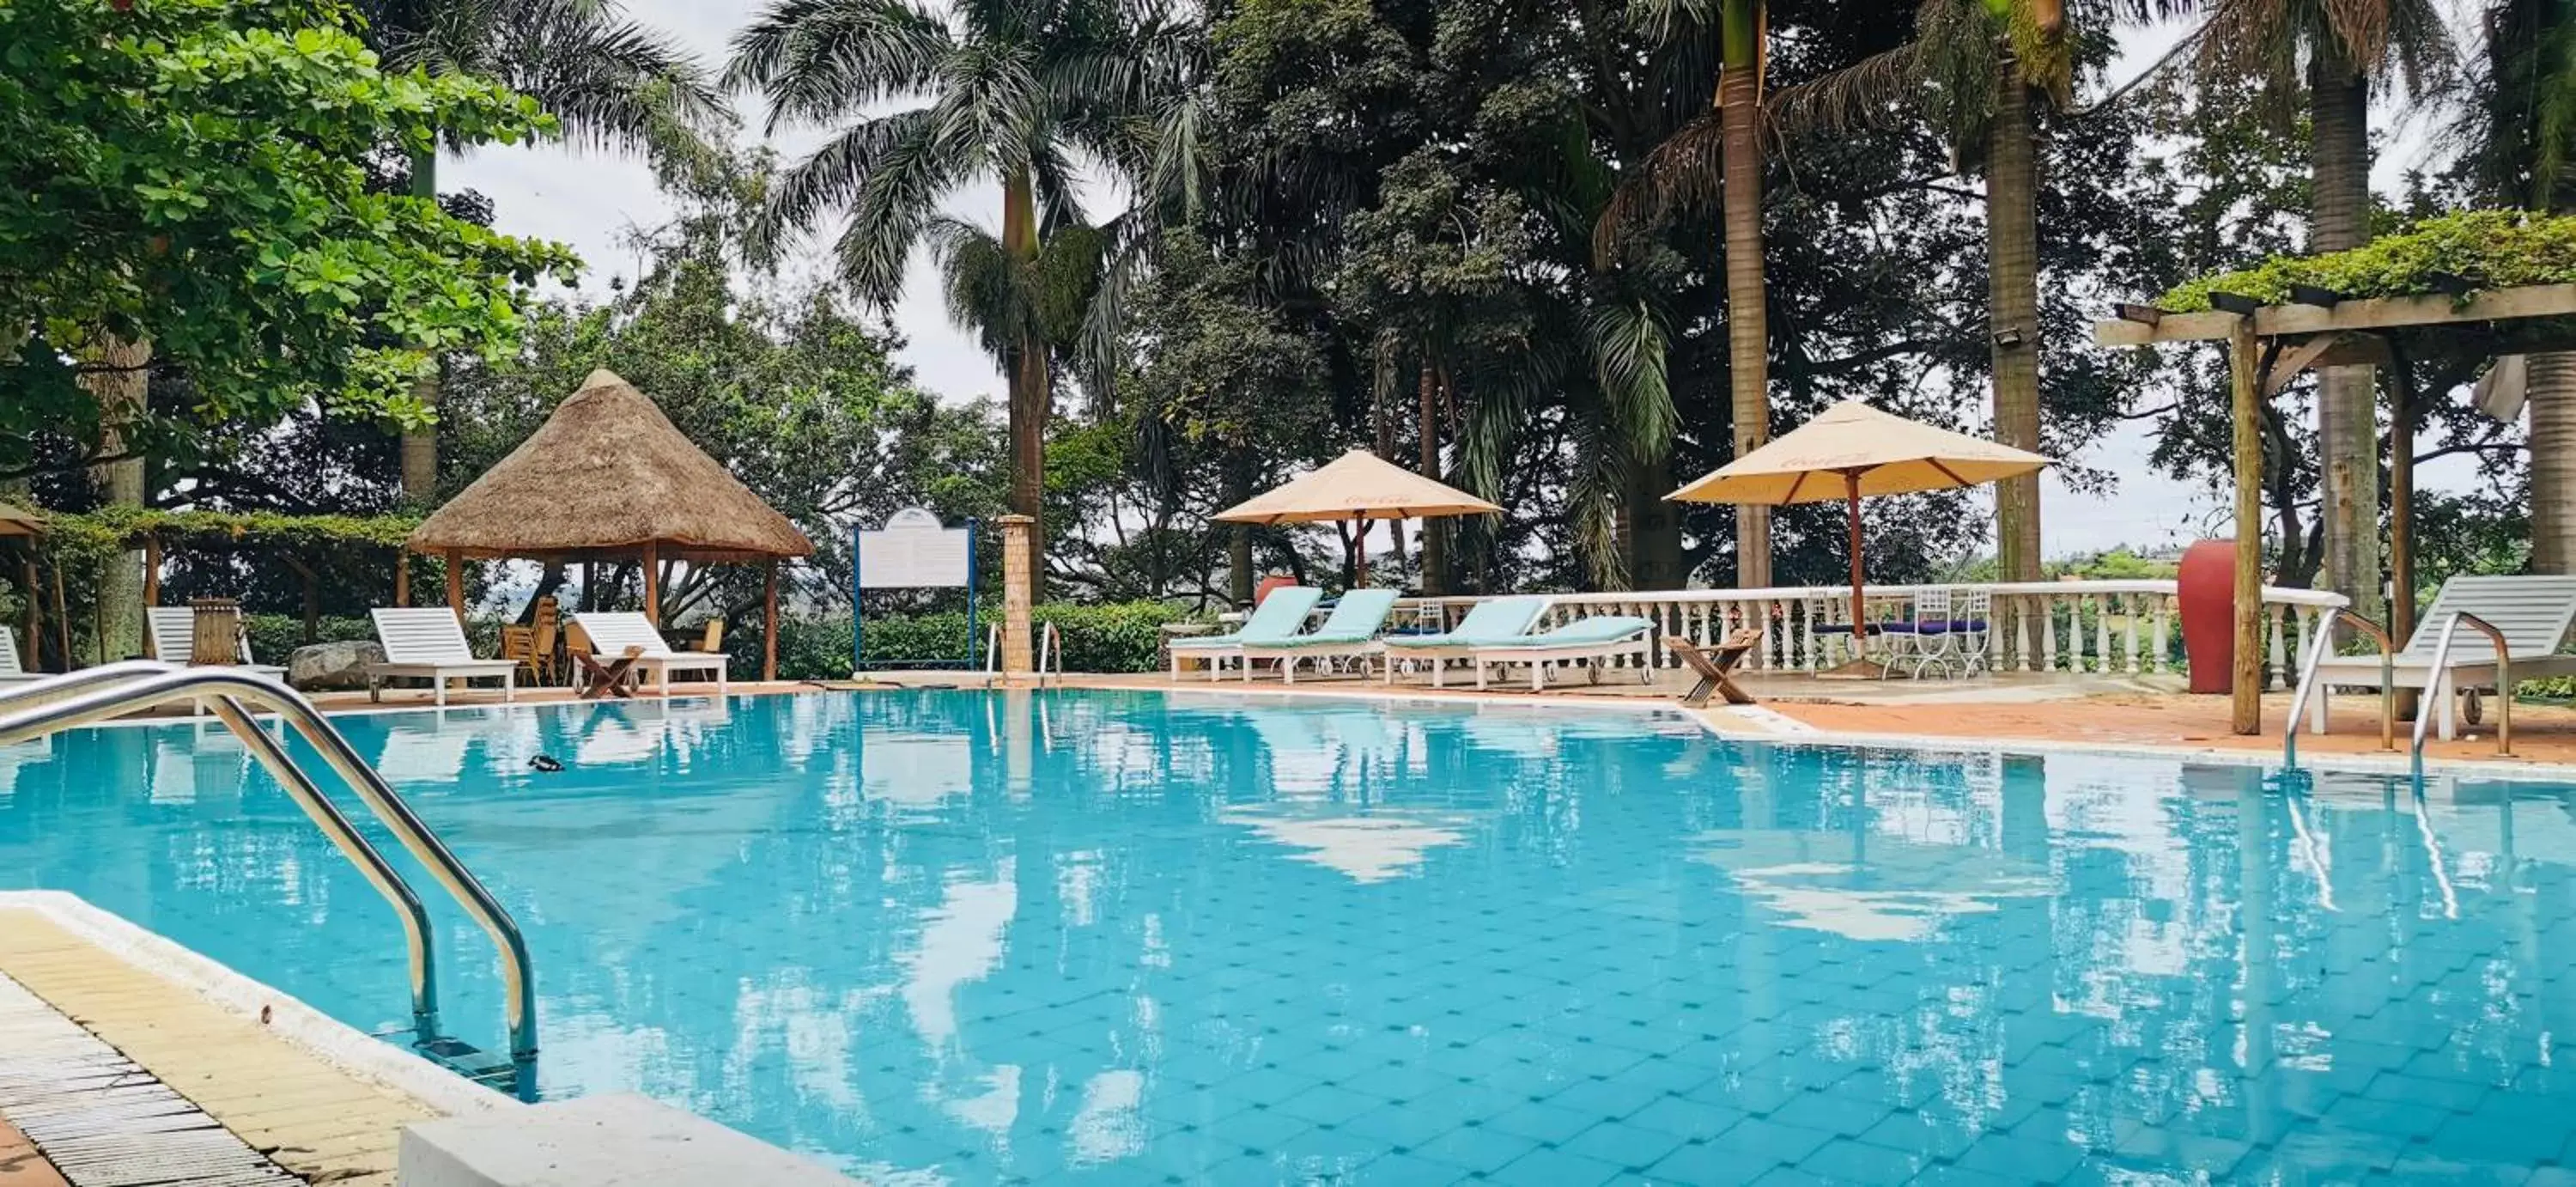 Swimming Pool in Jinja Nile Resort